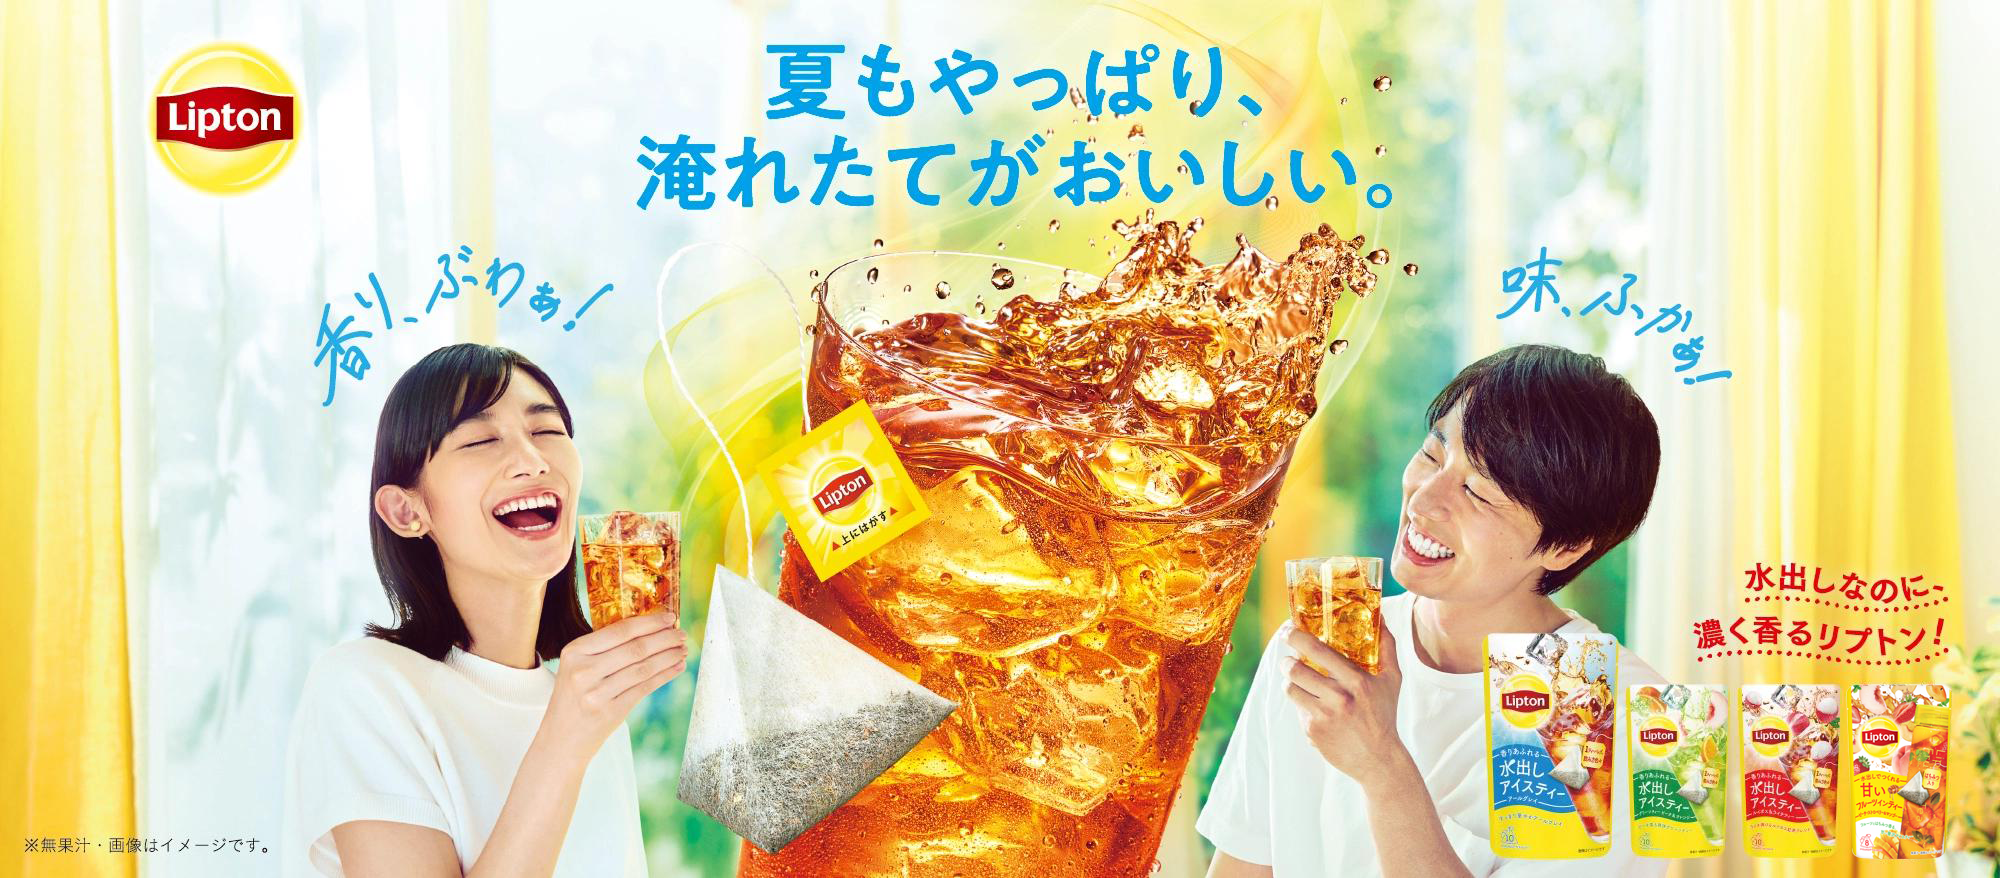 Cold Brew Hero Image | Lipton Japan